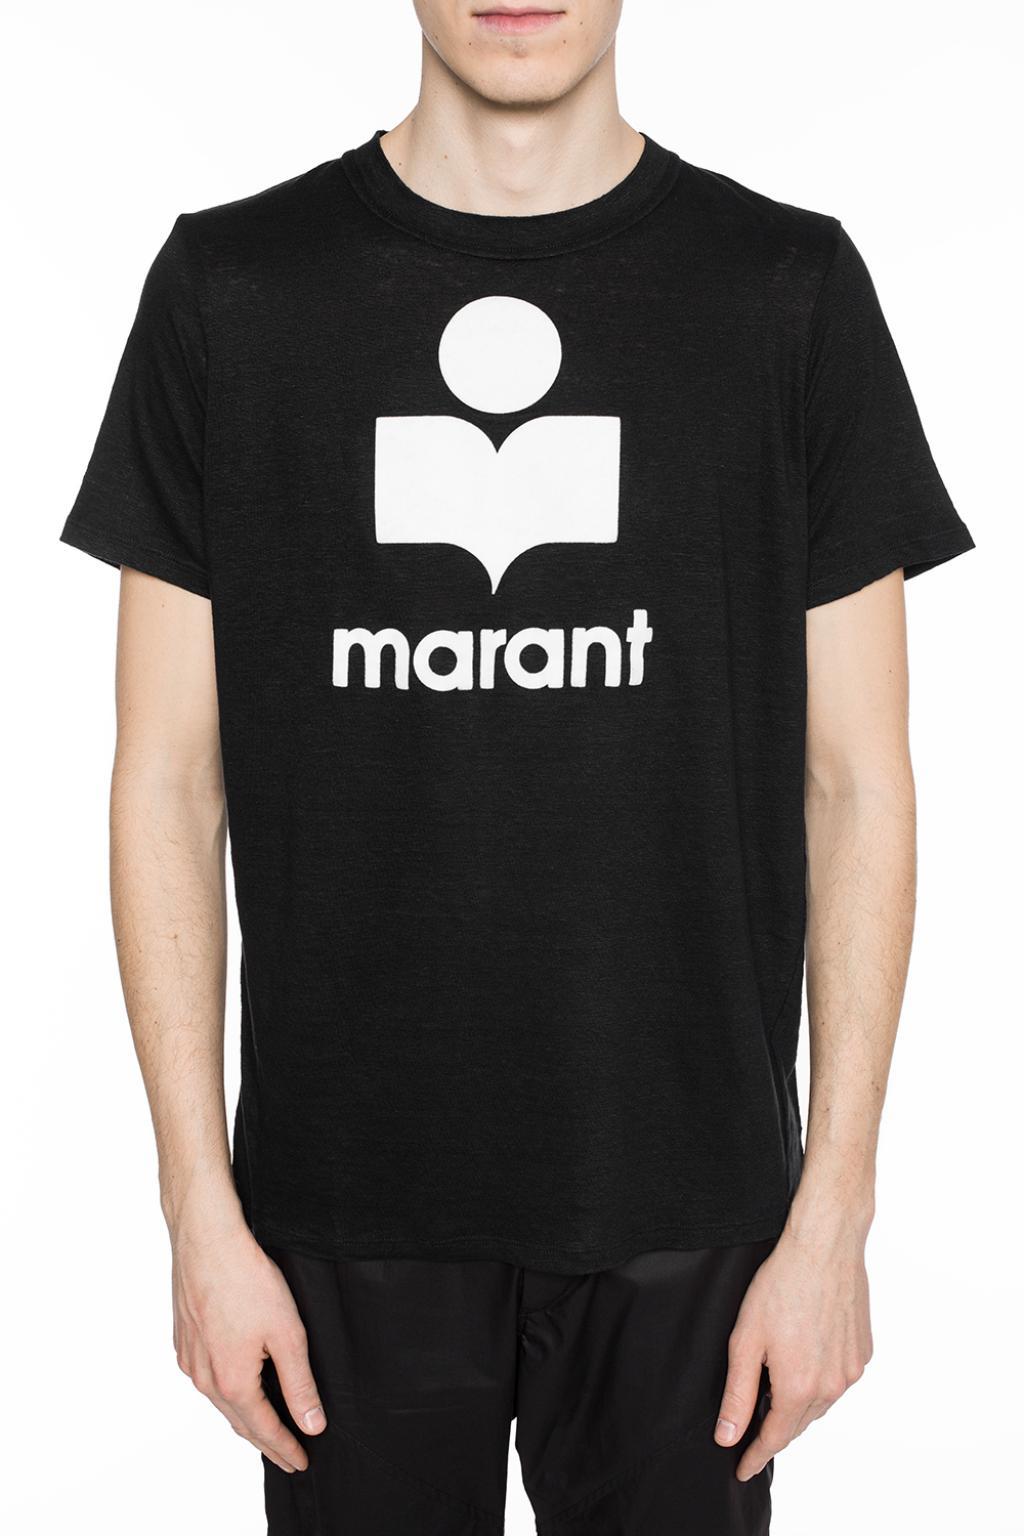 Isabel Marant Linen Karman T-shirt in Black for Men - Lyst